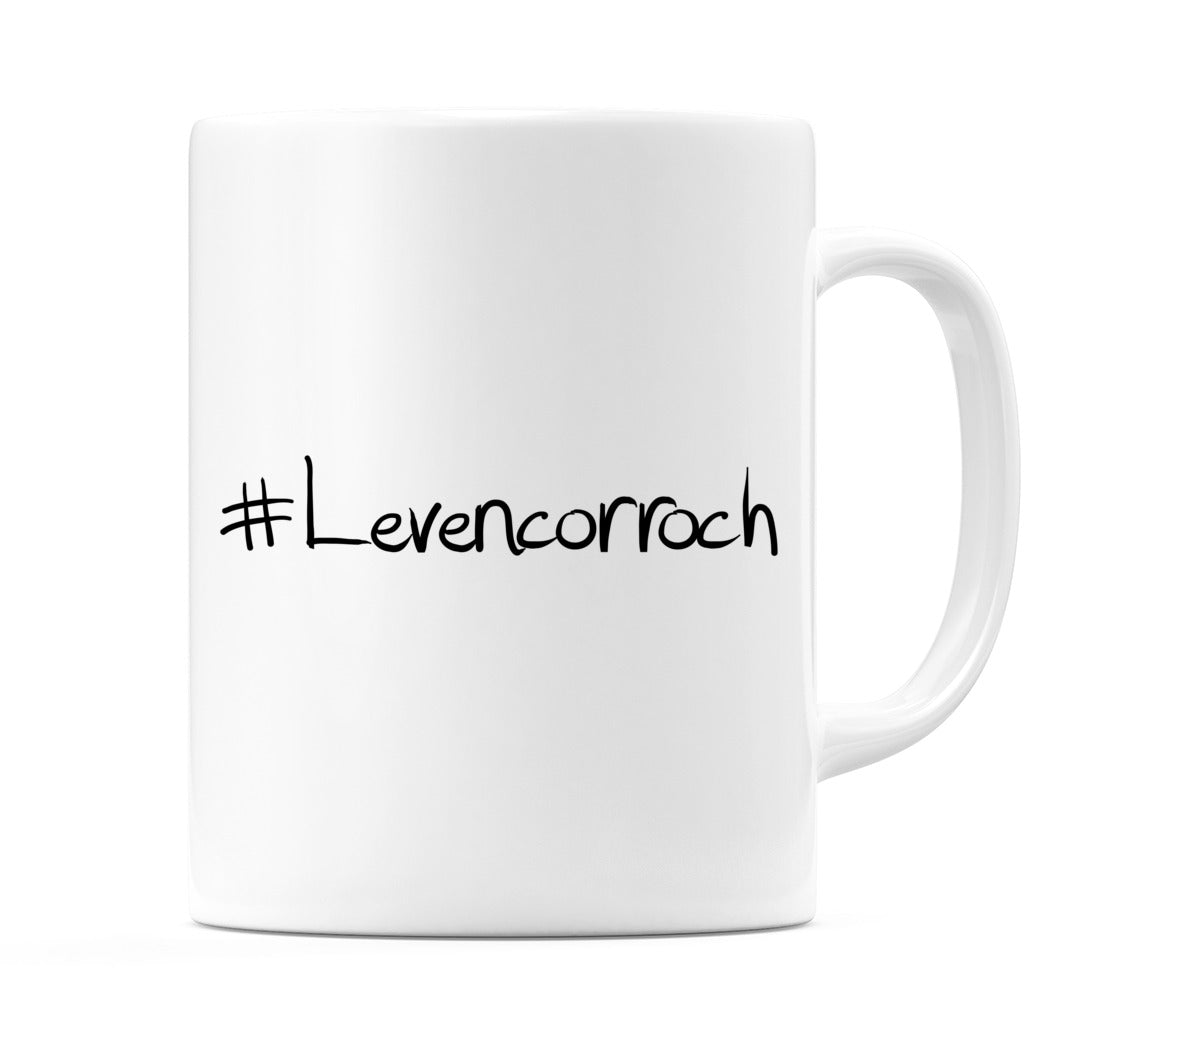 #Levencorroch Mug